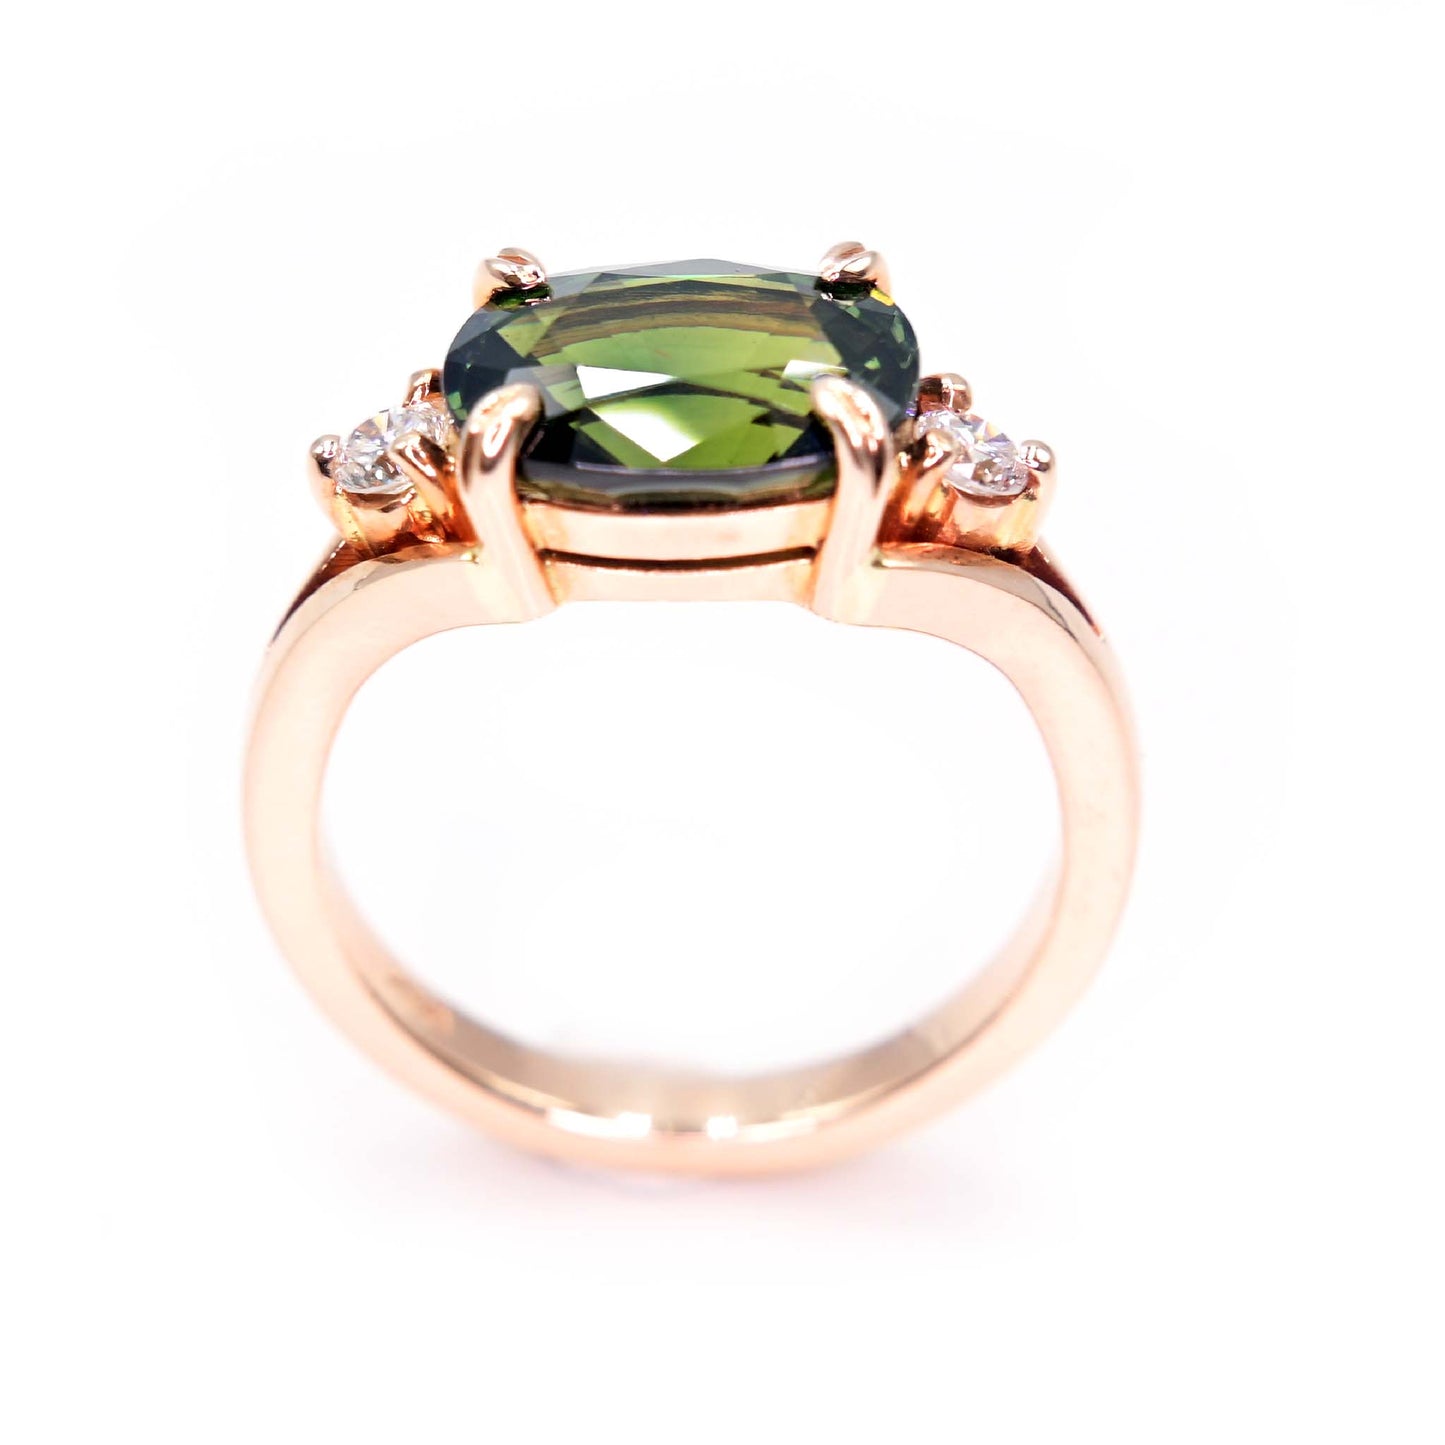 Forestgreen Sapphire Ring